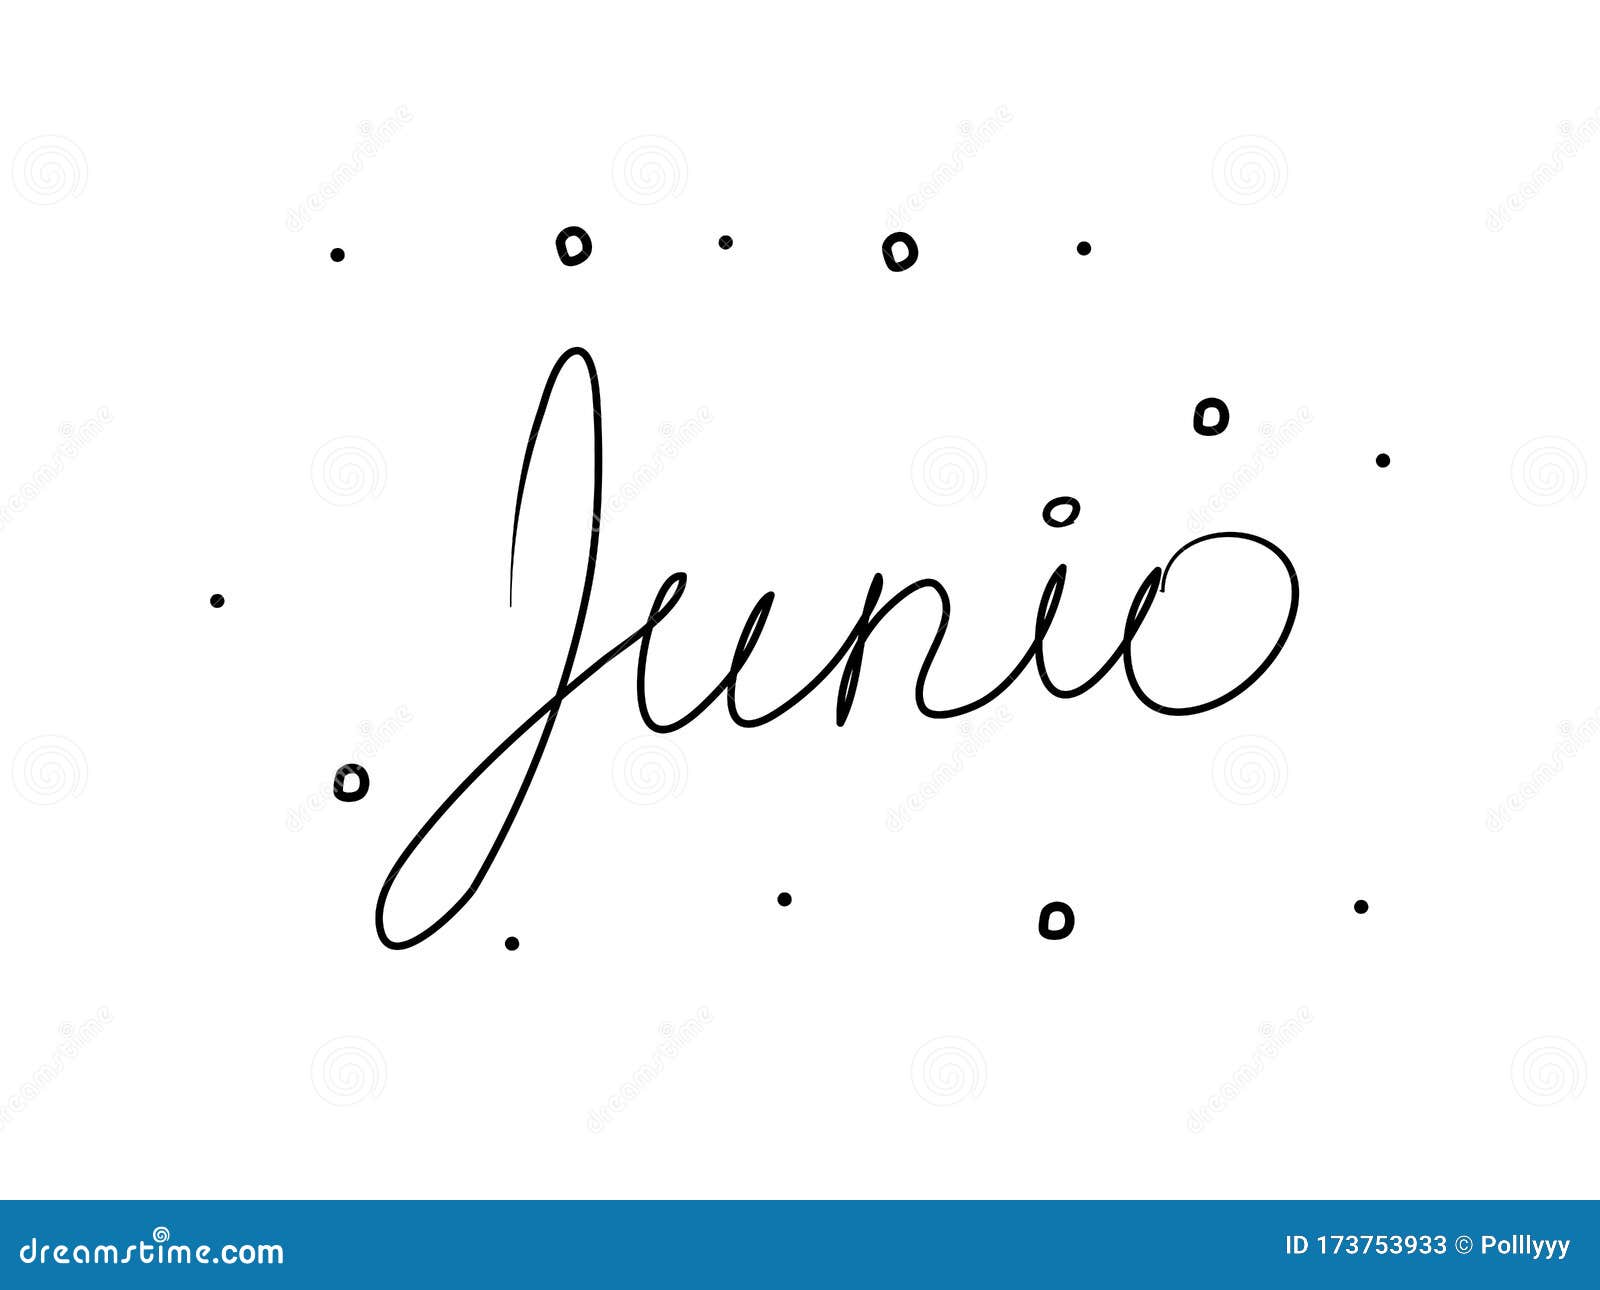 junio phrase handwritten with a calligraphy brush. june in spanish. modern brush calligraphy.  word black